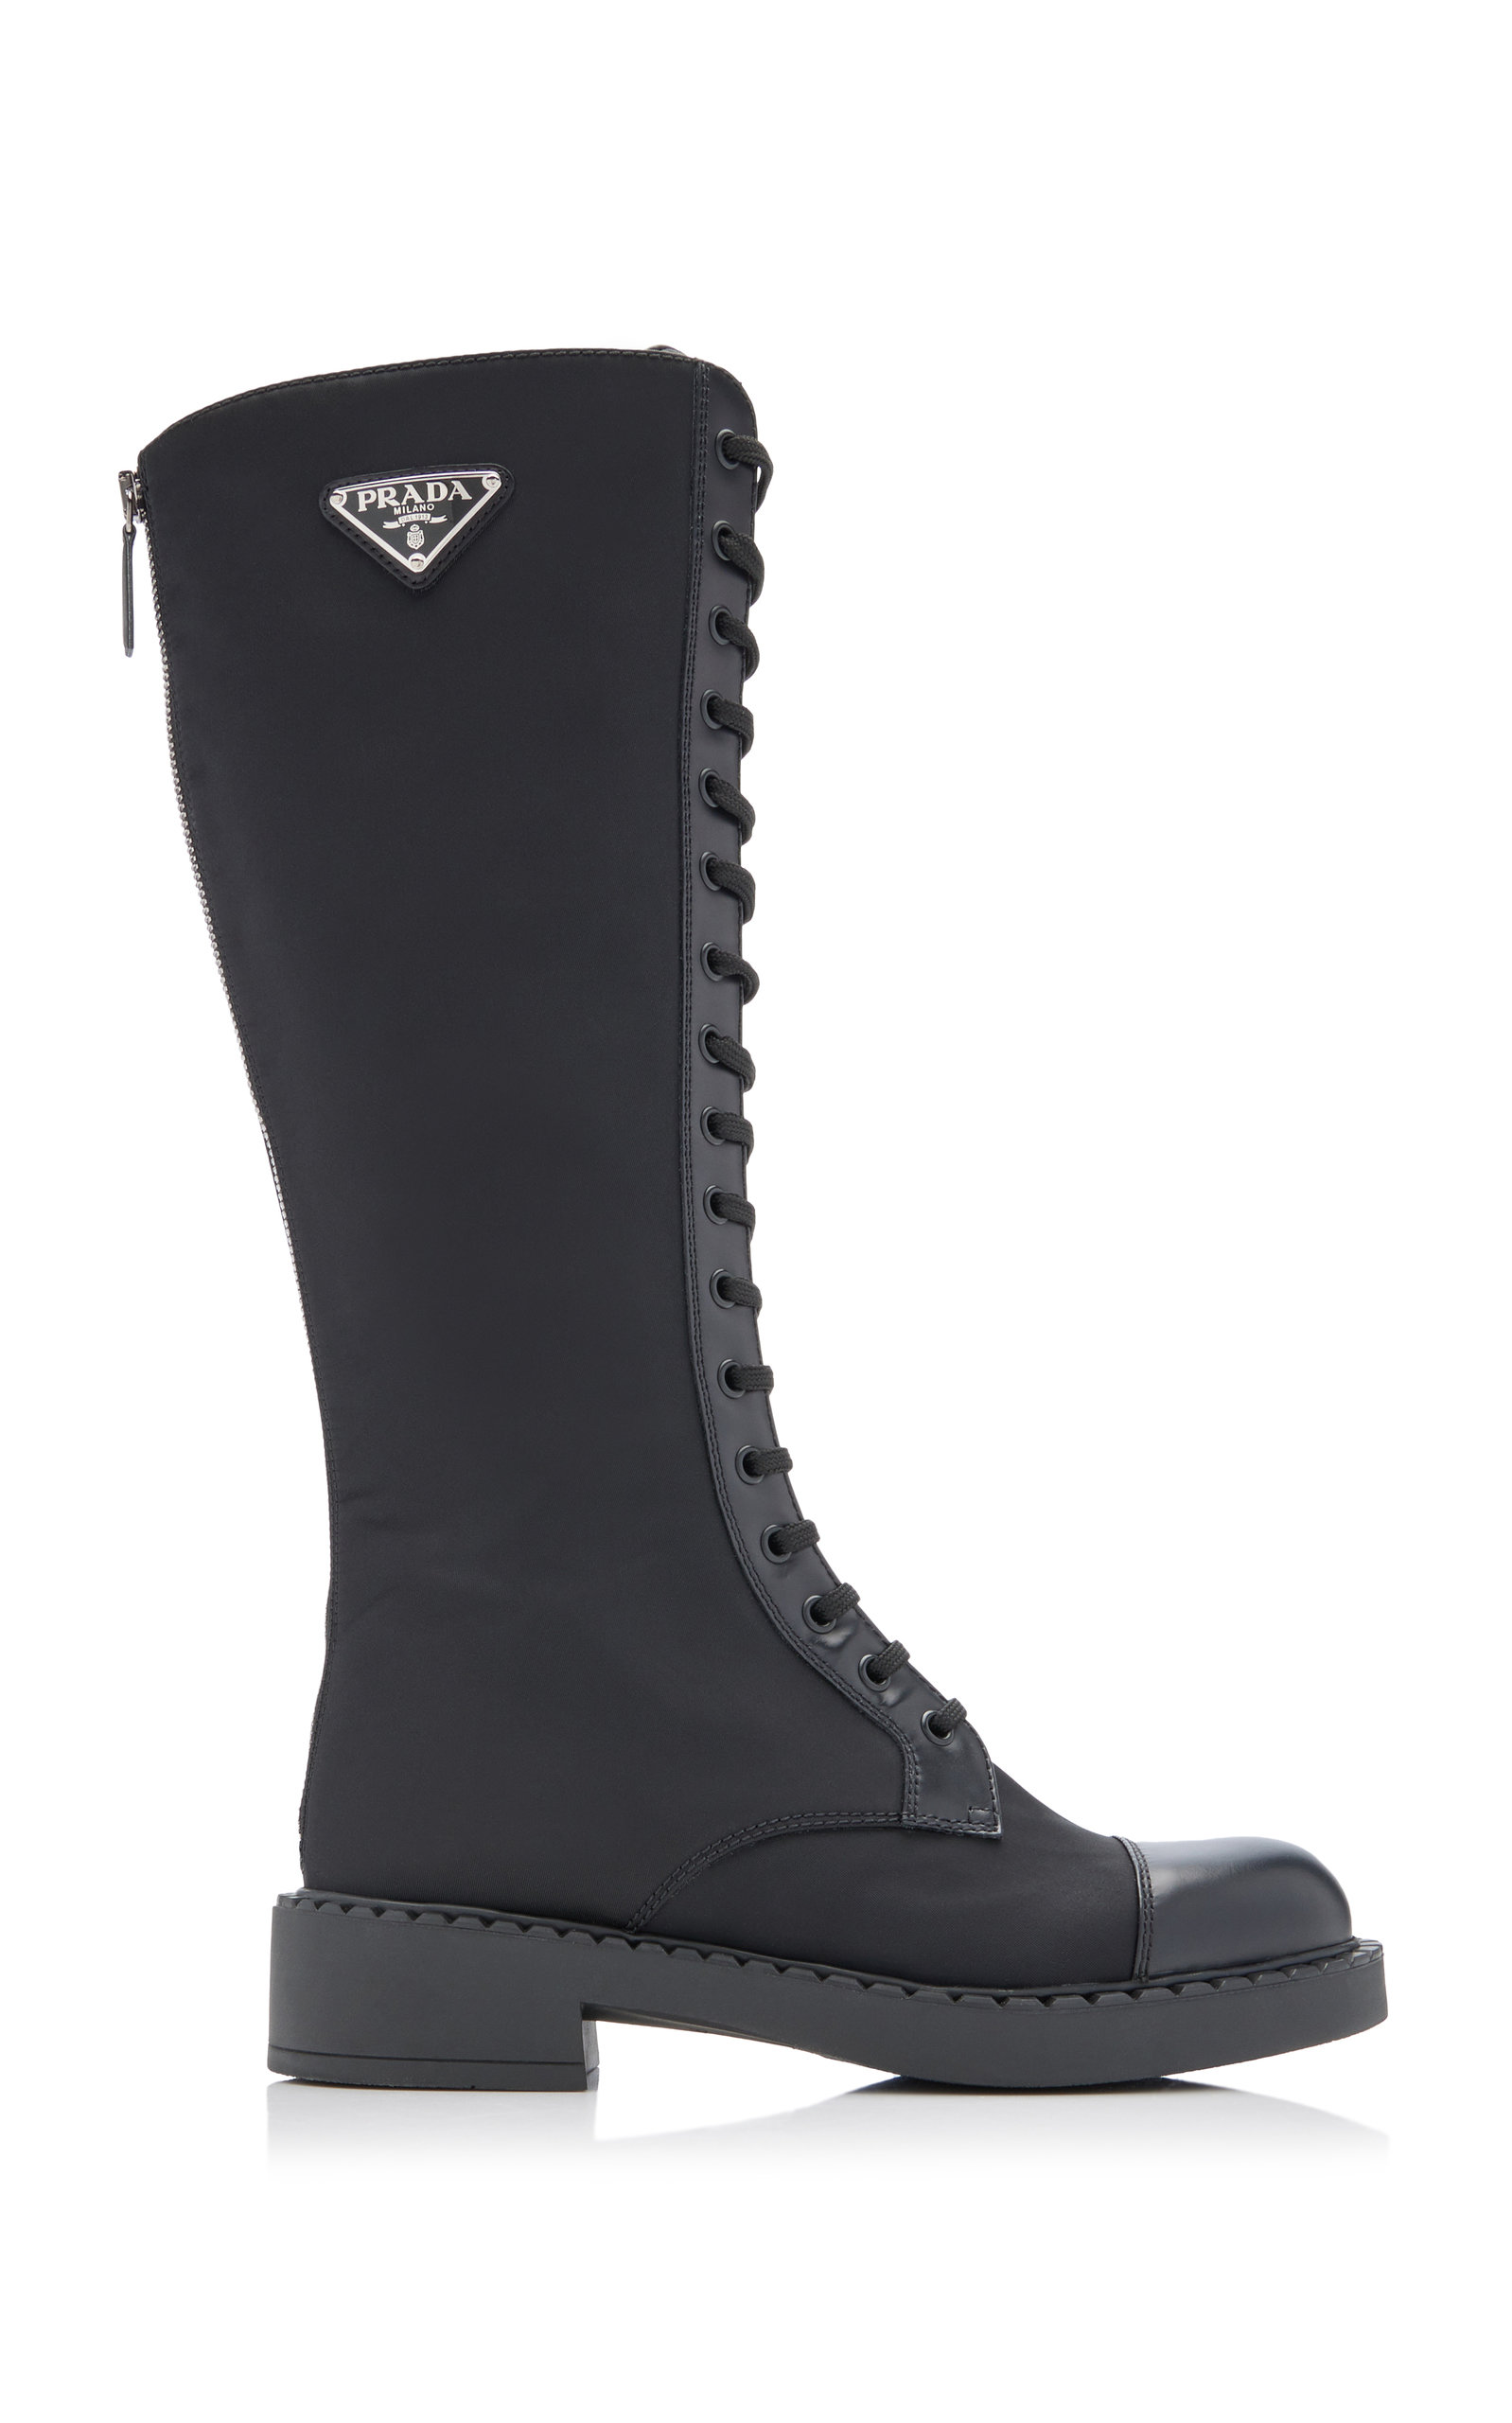 Prada - Women's Leather-Trimmed Nylon Lace-Up Knee Boots - Black/neutral - Moda Operandi